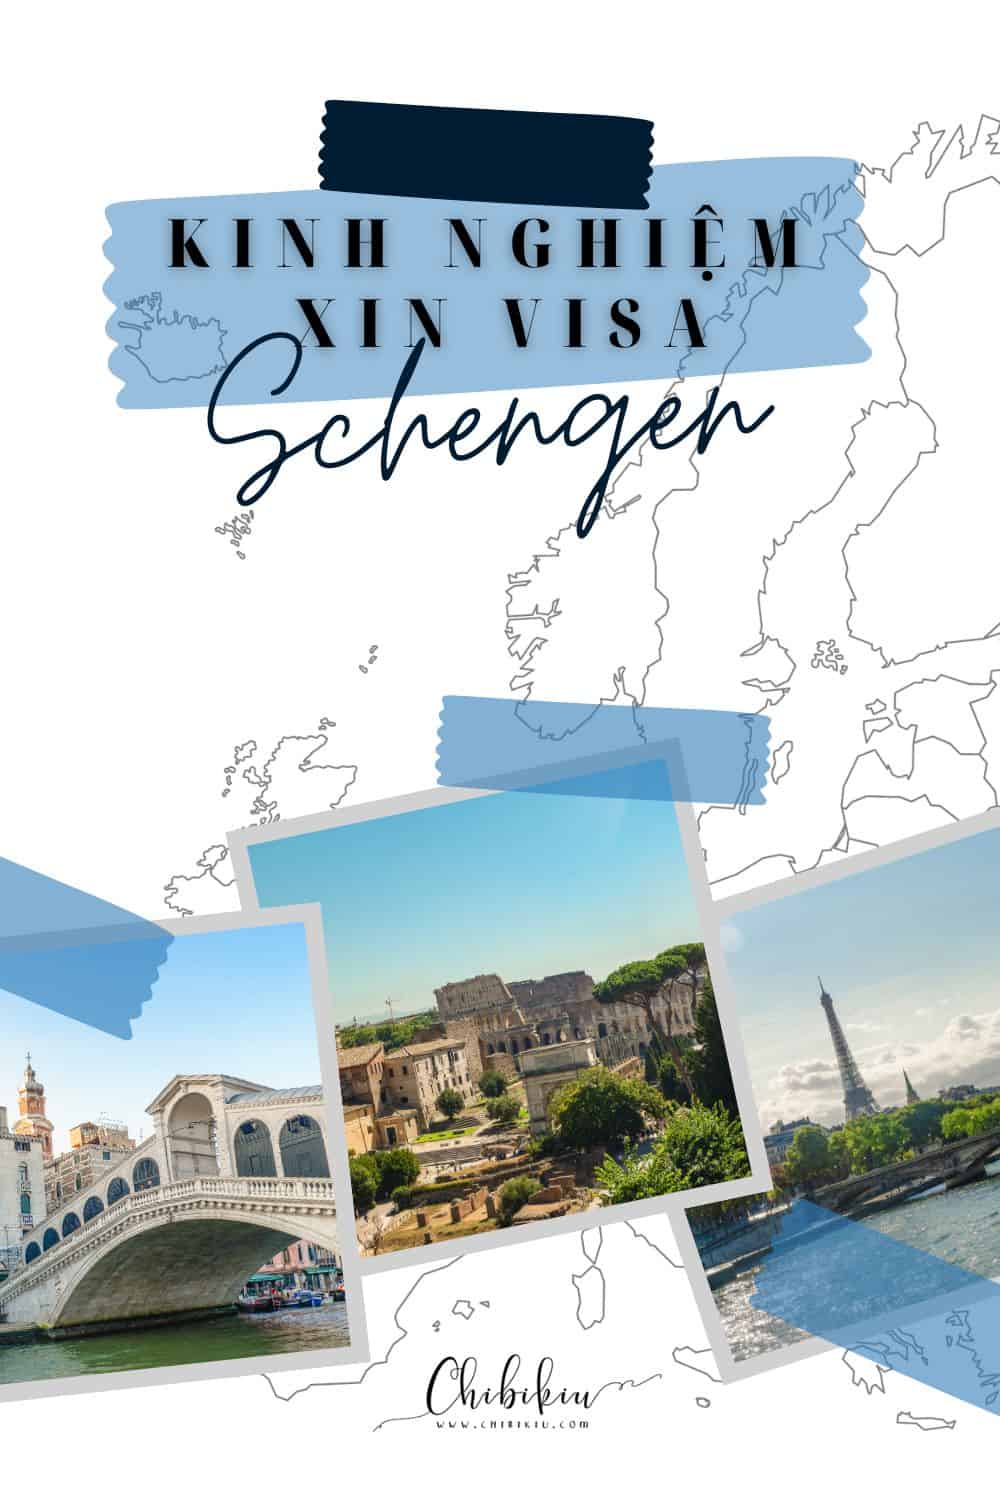 kinh nghiệm xin visa schengen